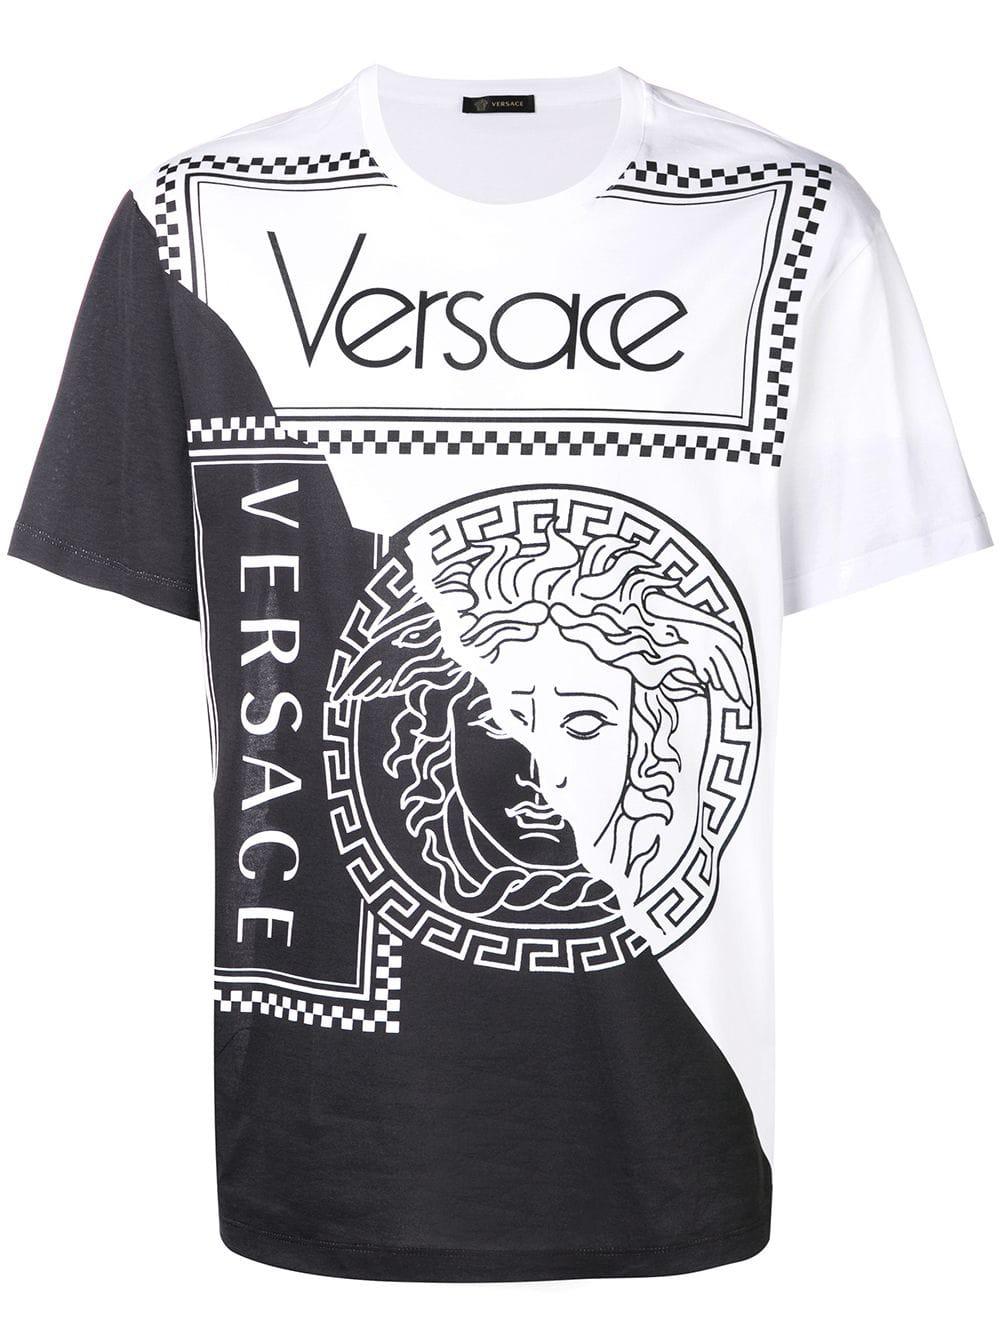 versace logo print t shirt